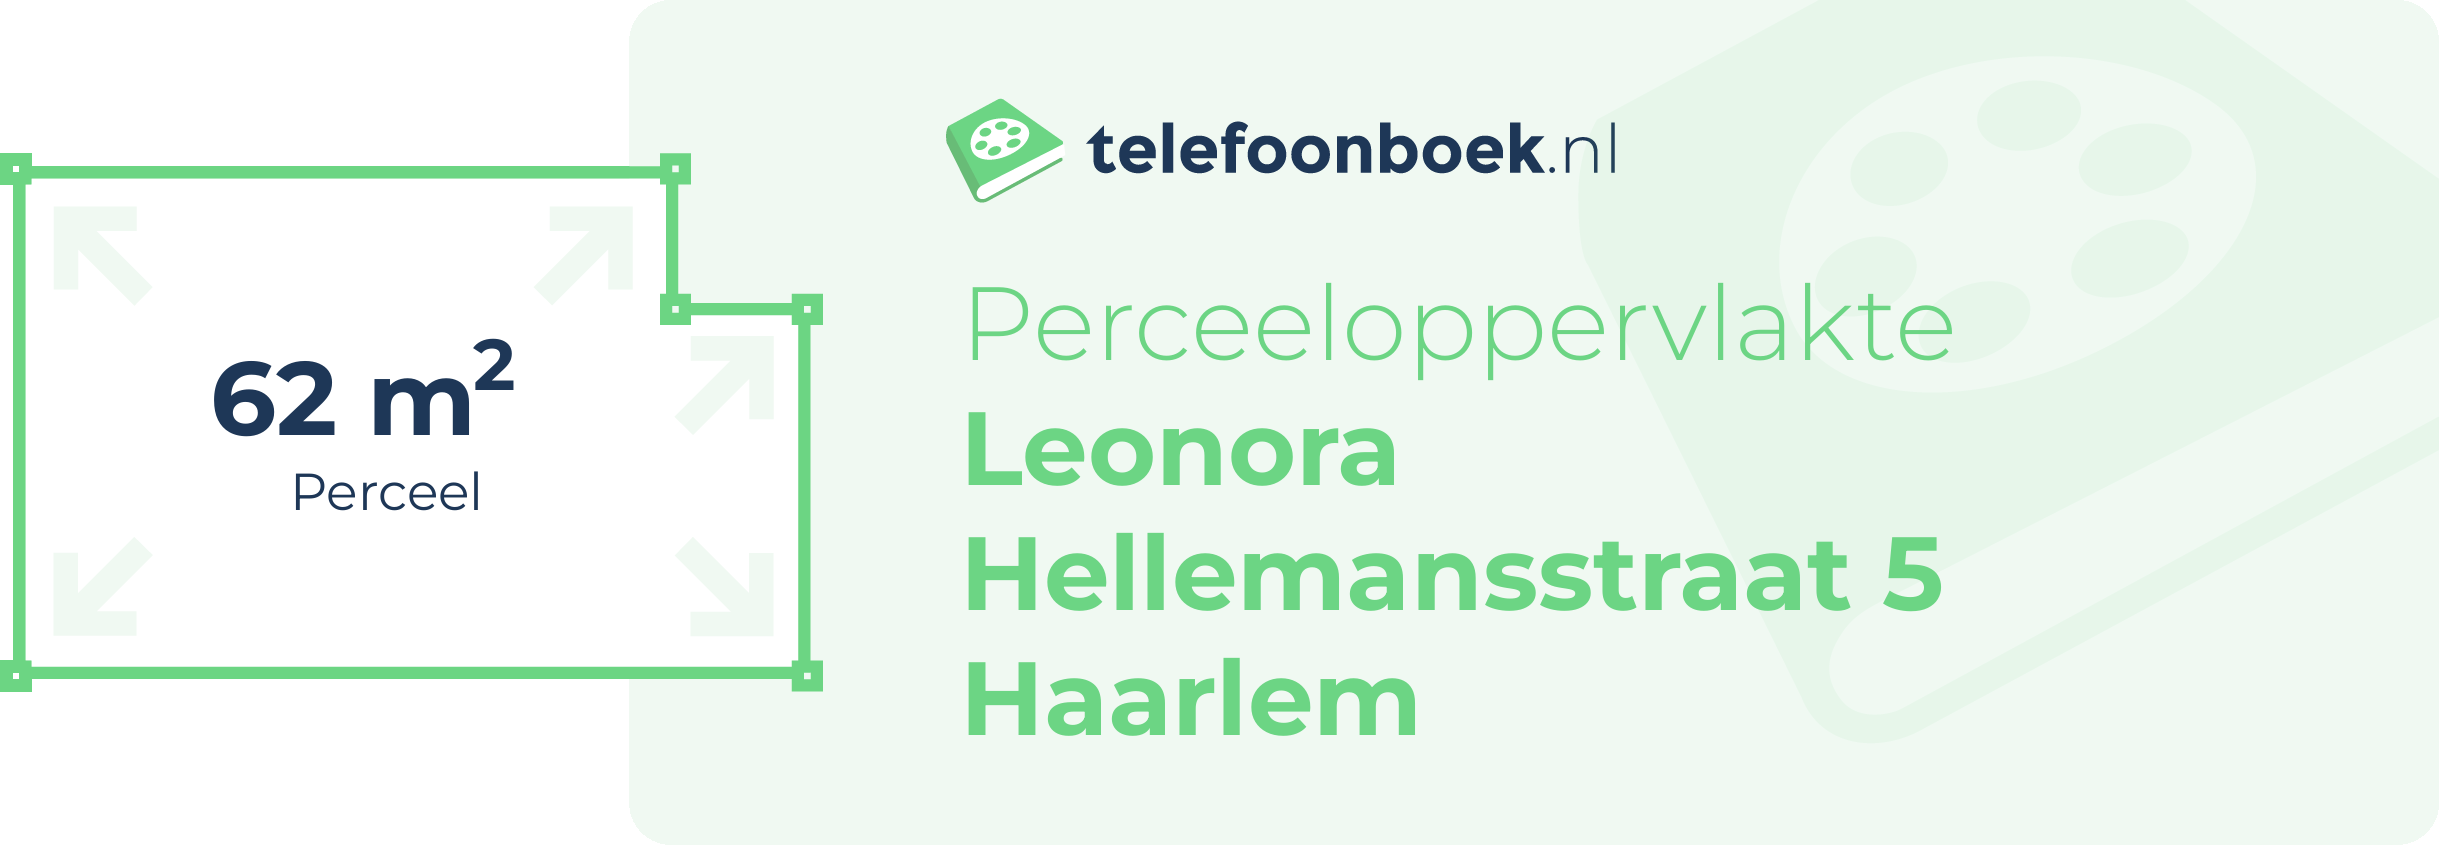 Perceeloppervlakte Leonora Hellemansstraat 5 Haarlem